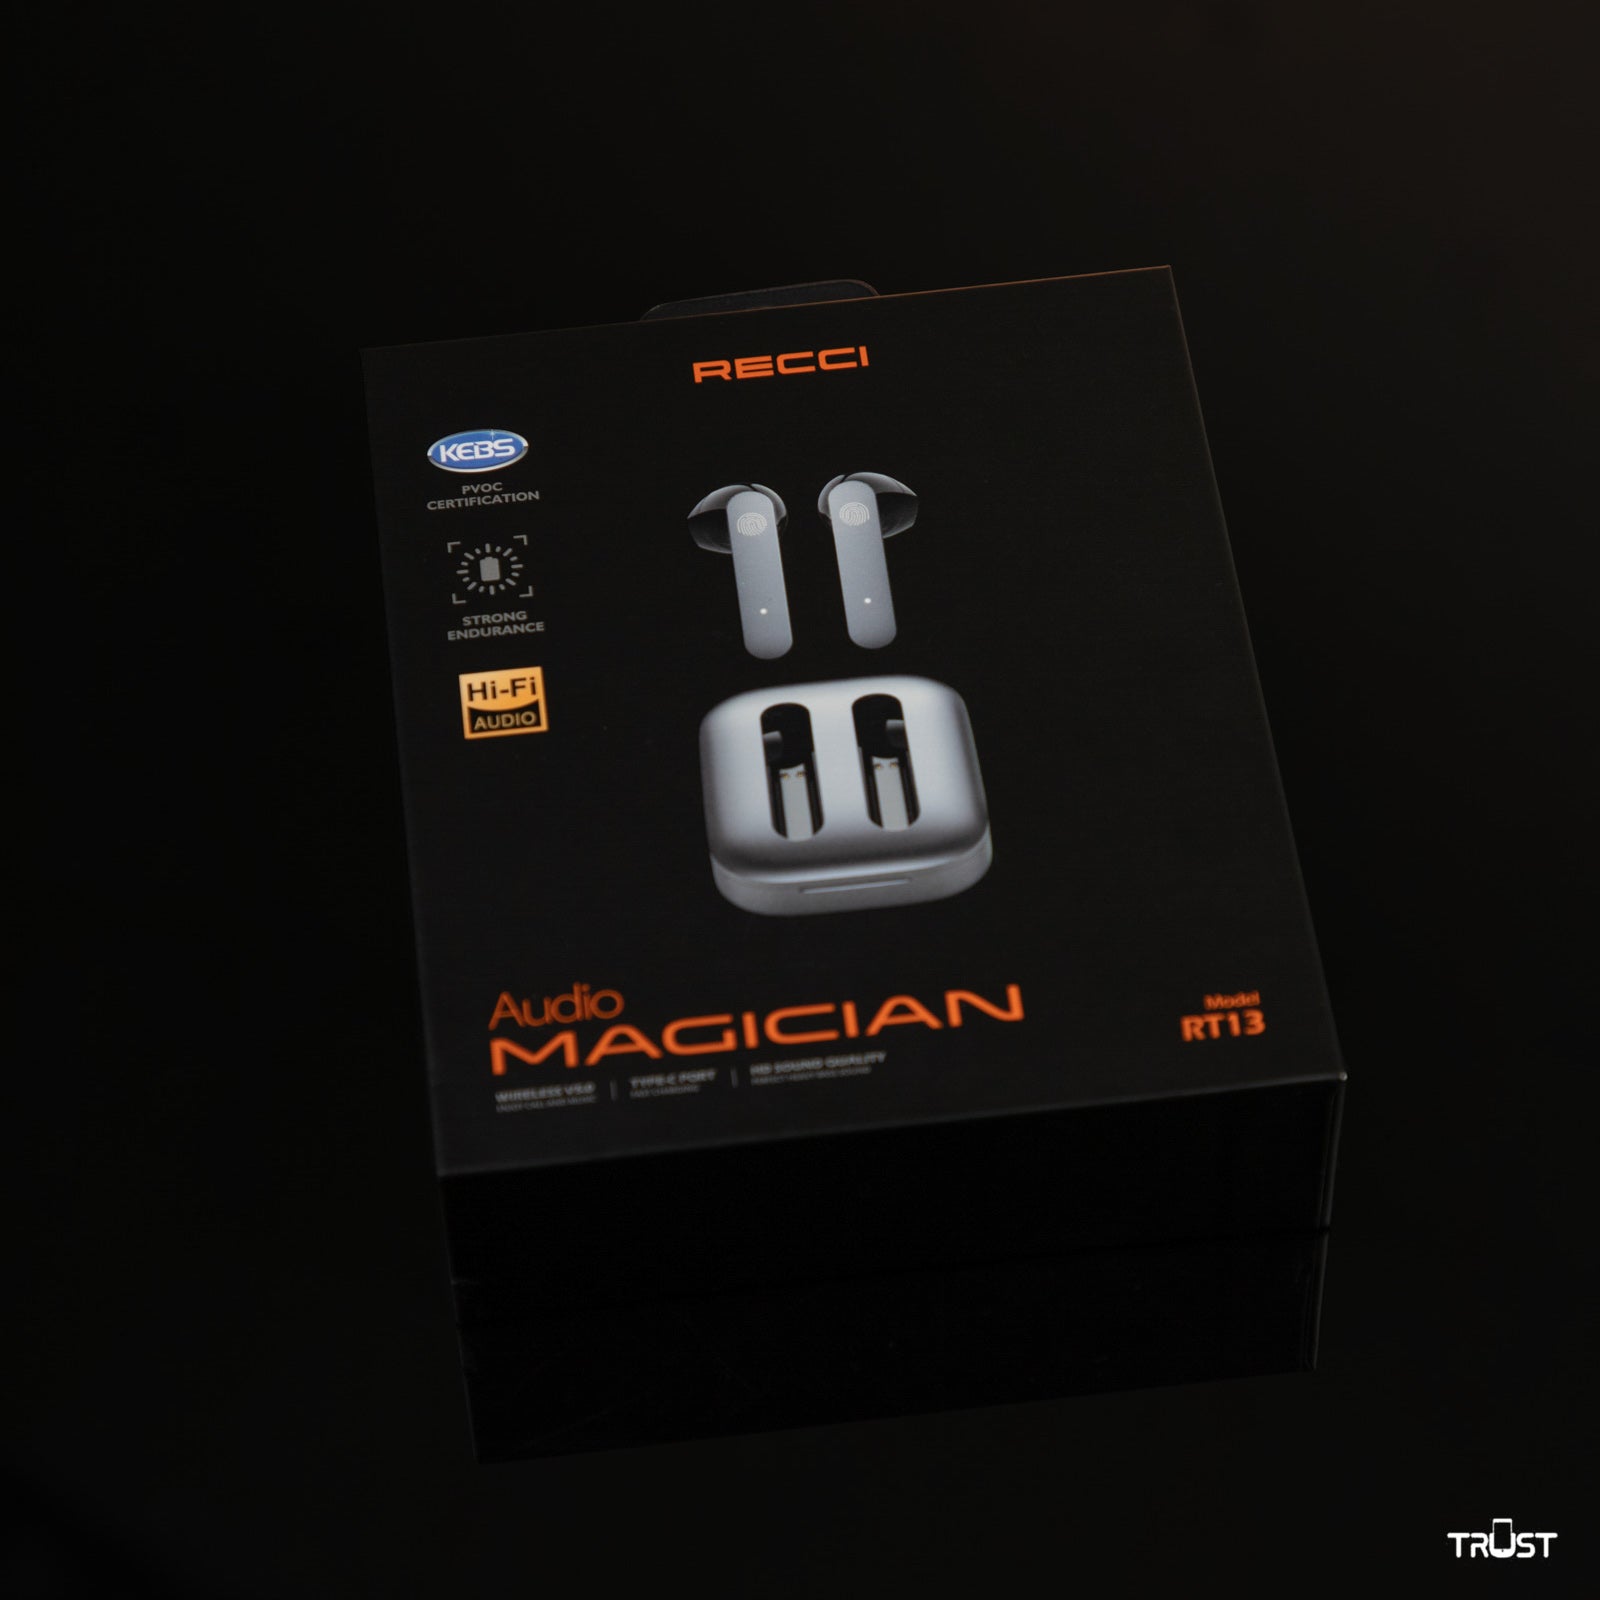 Recci Audio Magician Wireless Earphone RT13